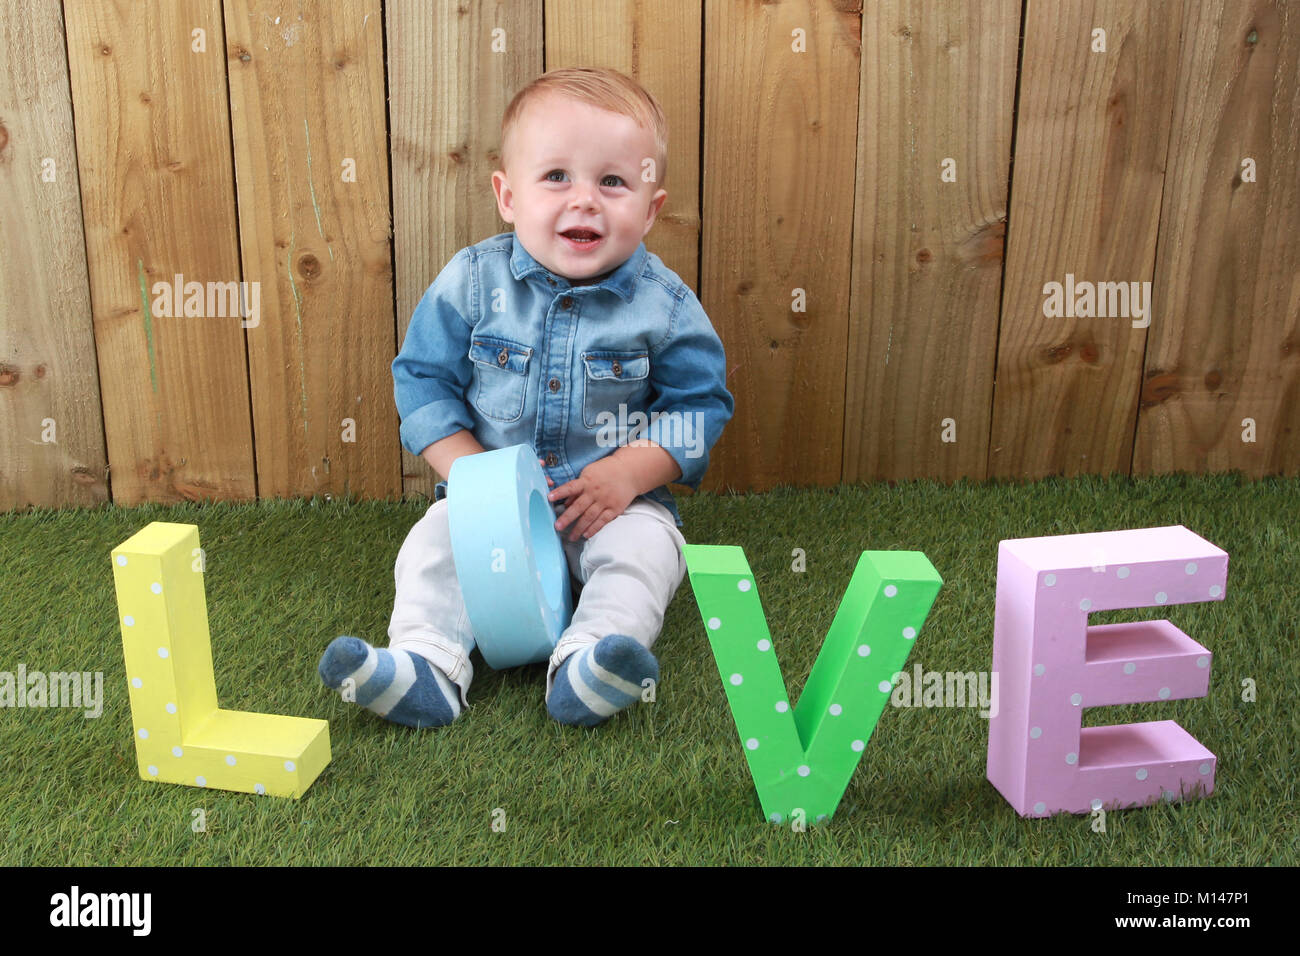 19 mesi bimbo giochi nel giardino, lo sviluppo infantile Foto stock - Alamy